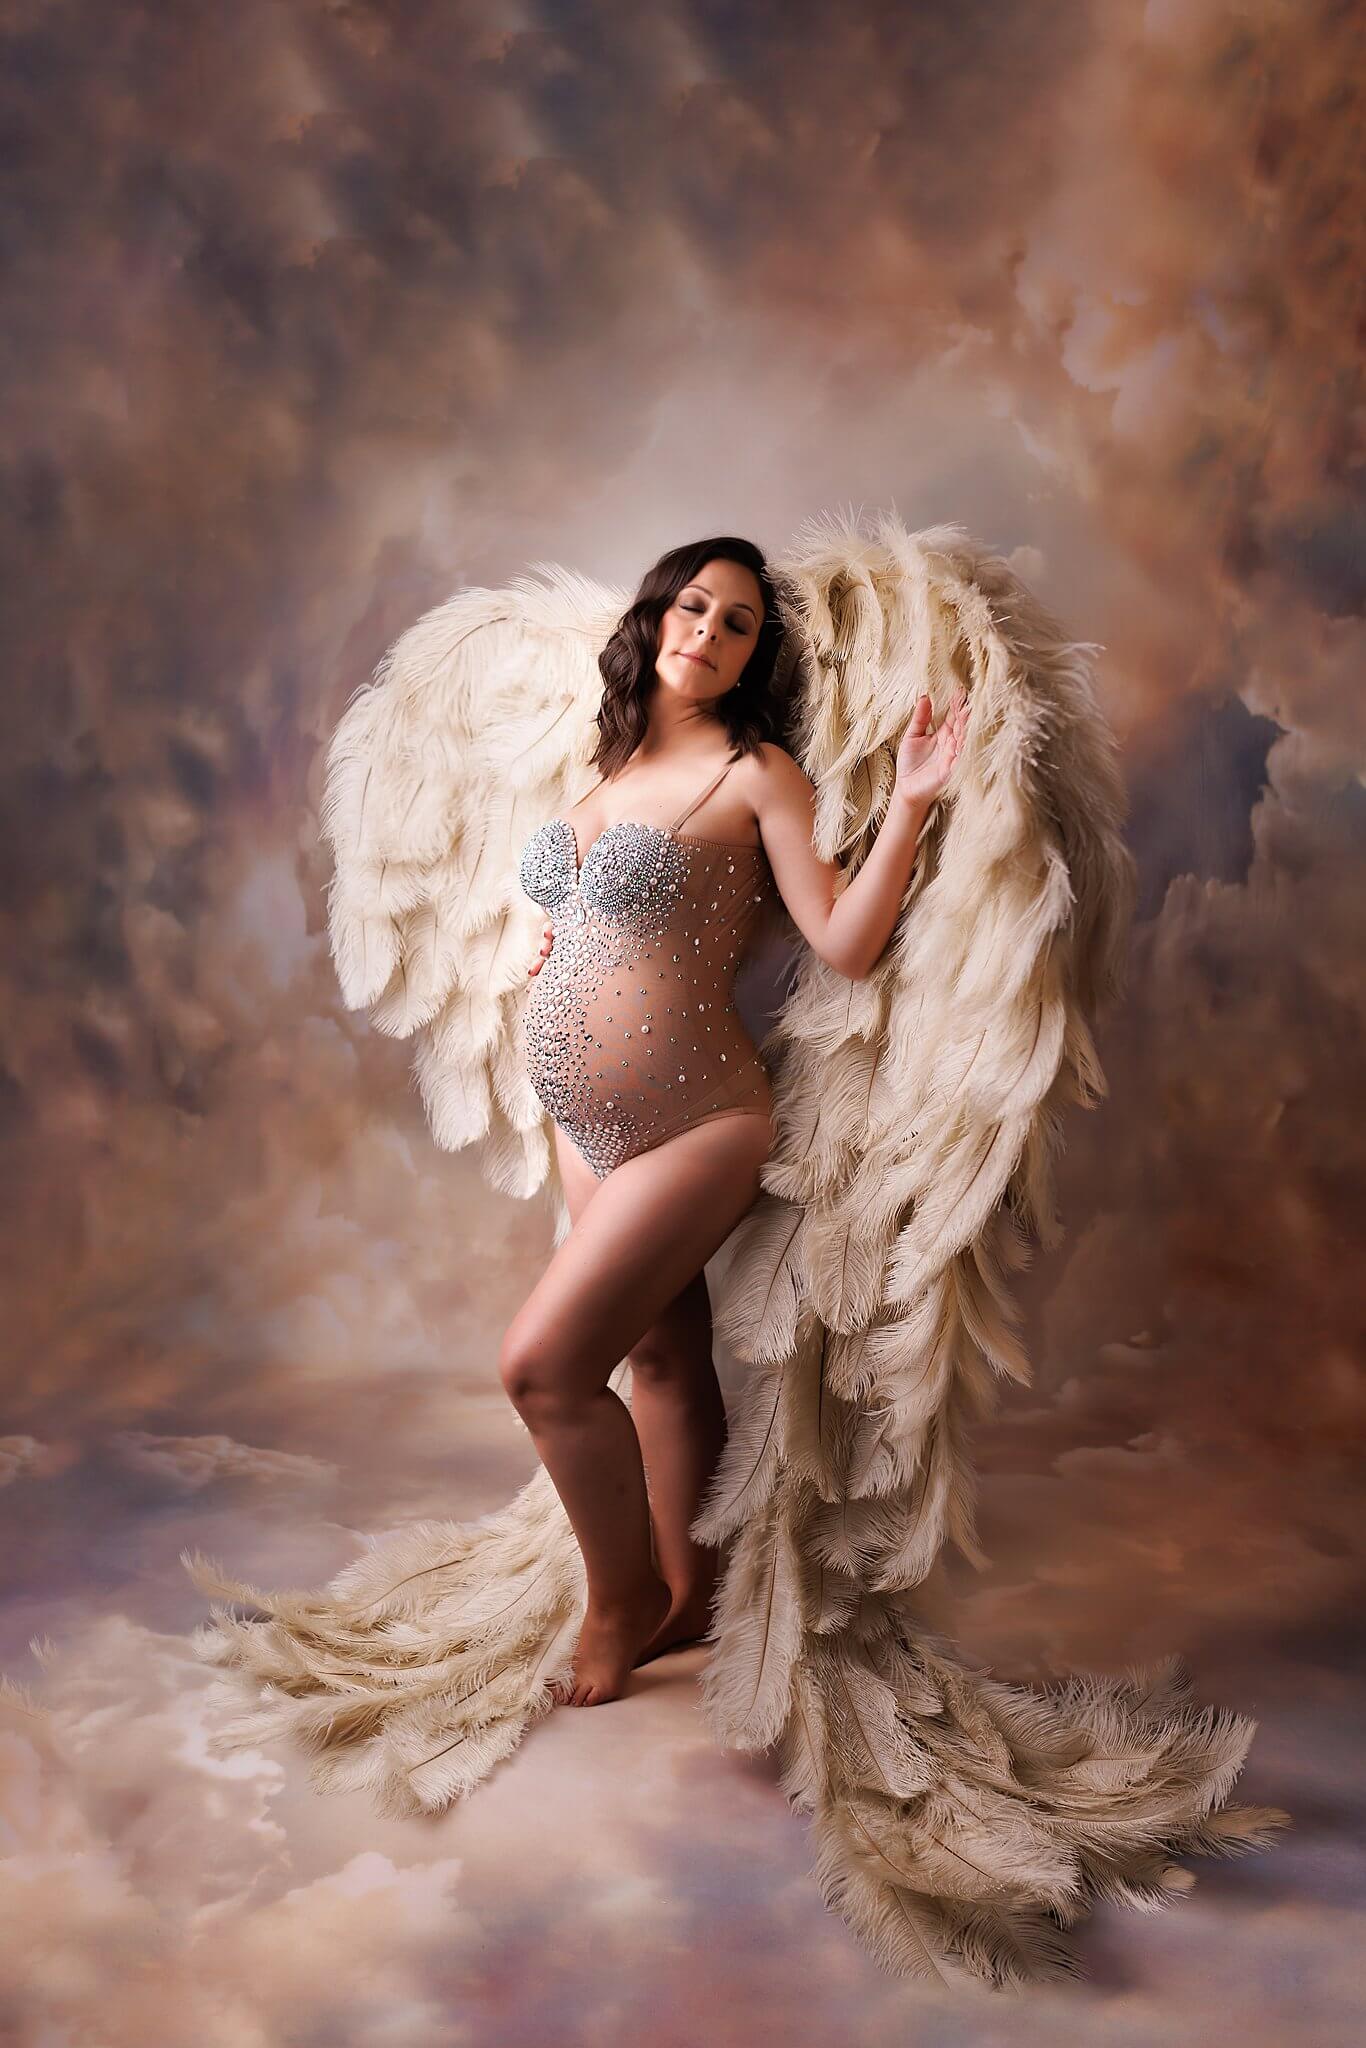 Pregnant woman modeling angel wings on a cloud backdrop